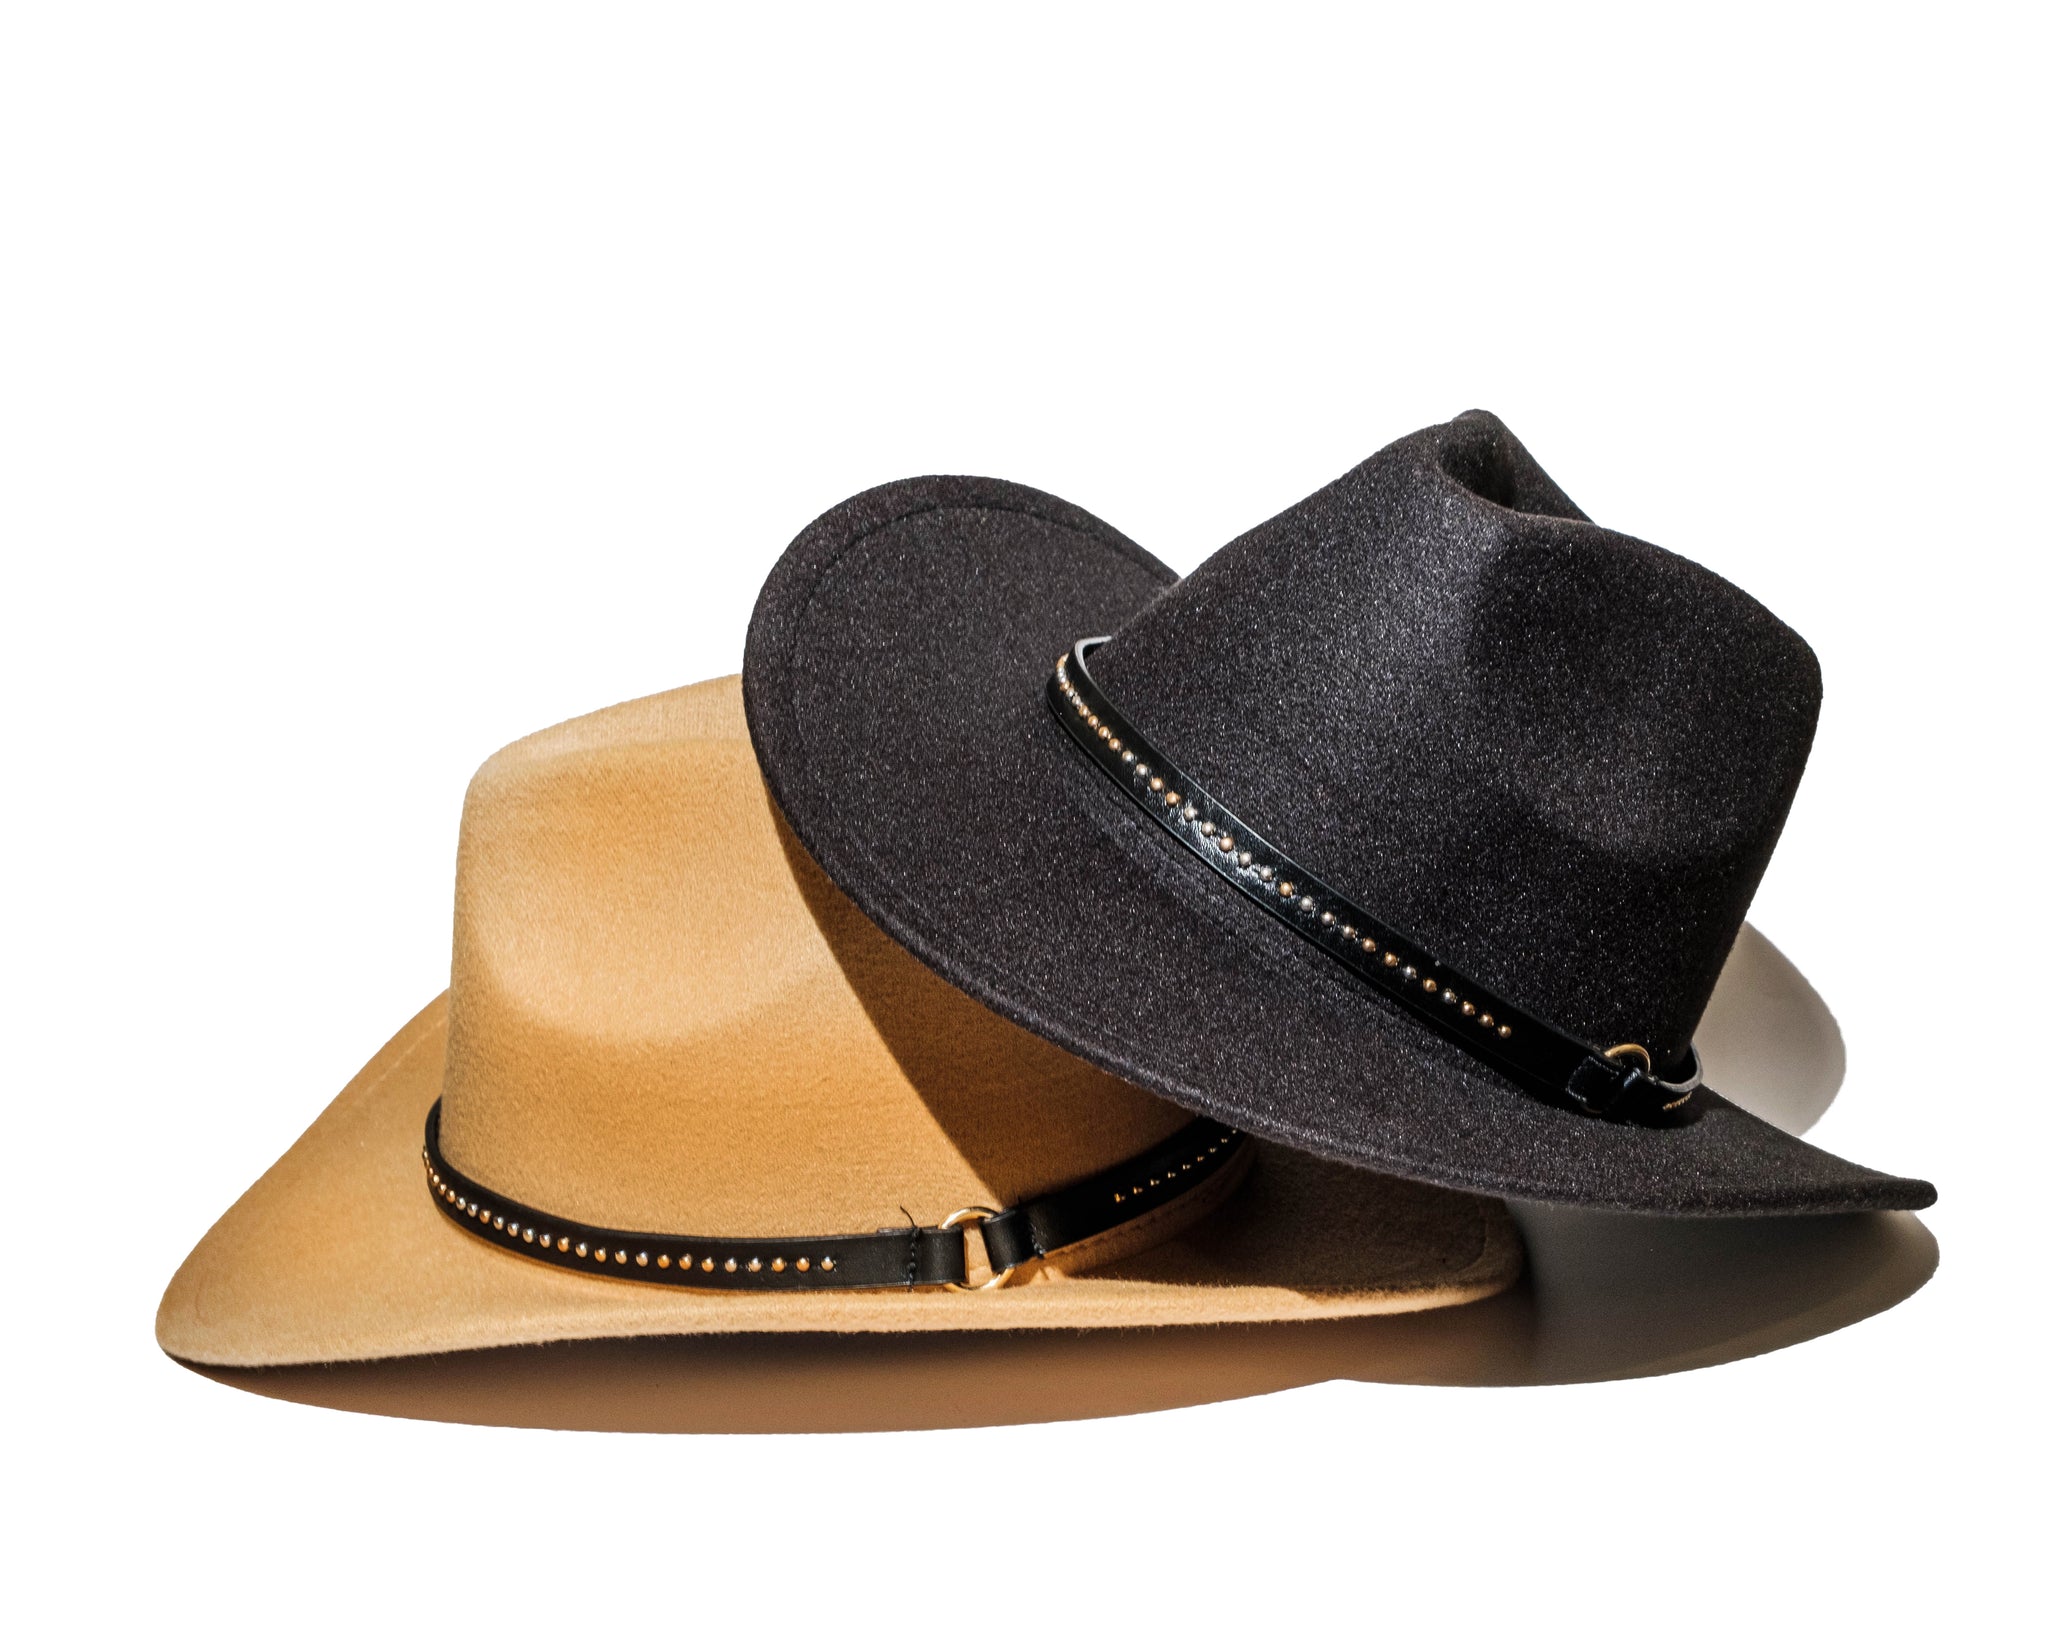 Chokore Cowboy Hat with Belt Band (Beige)